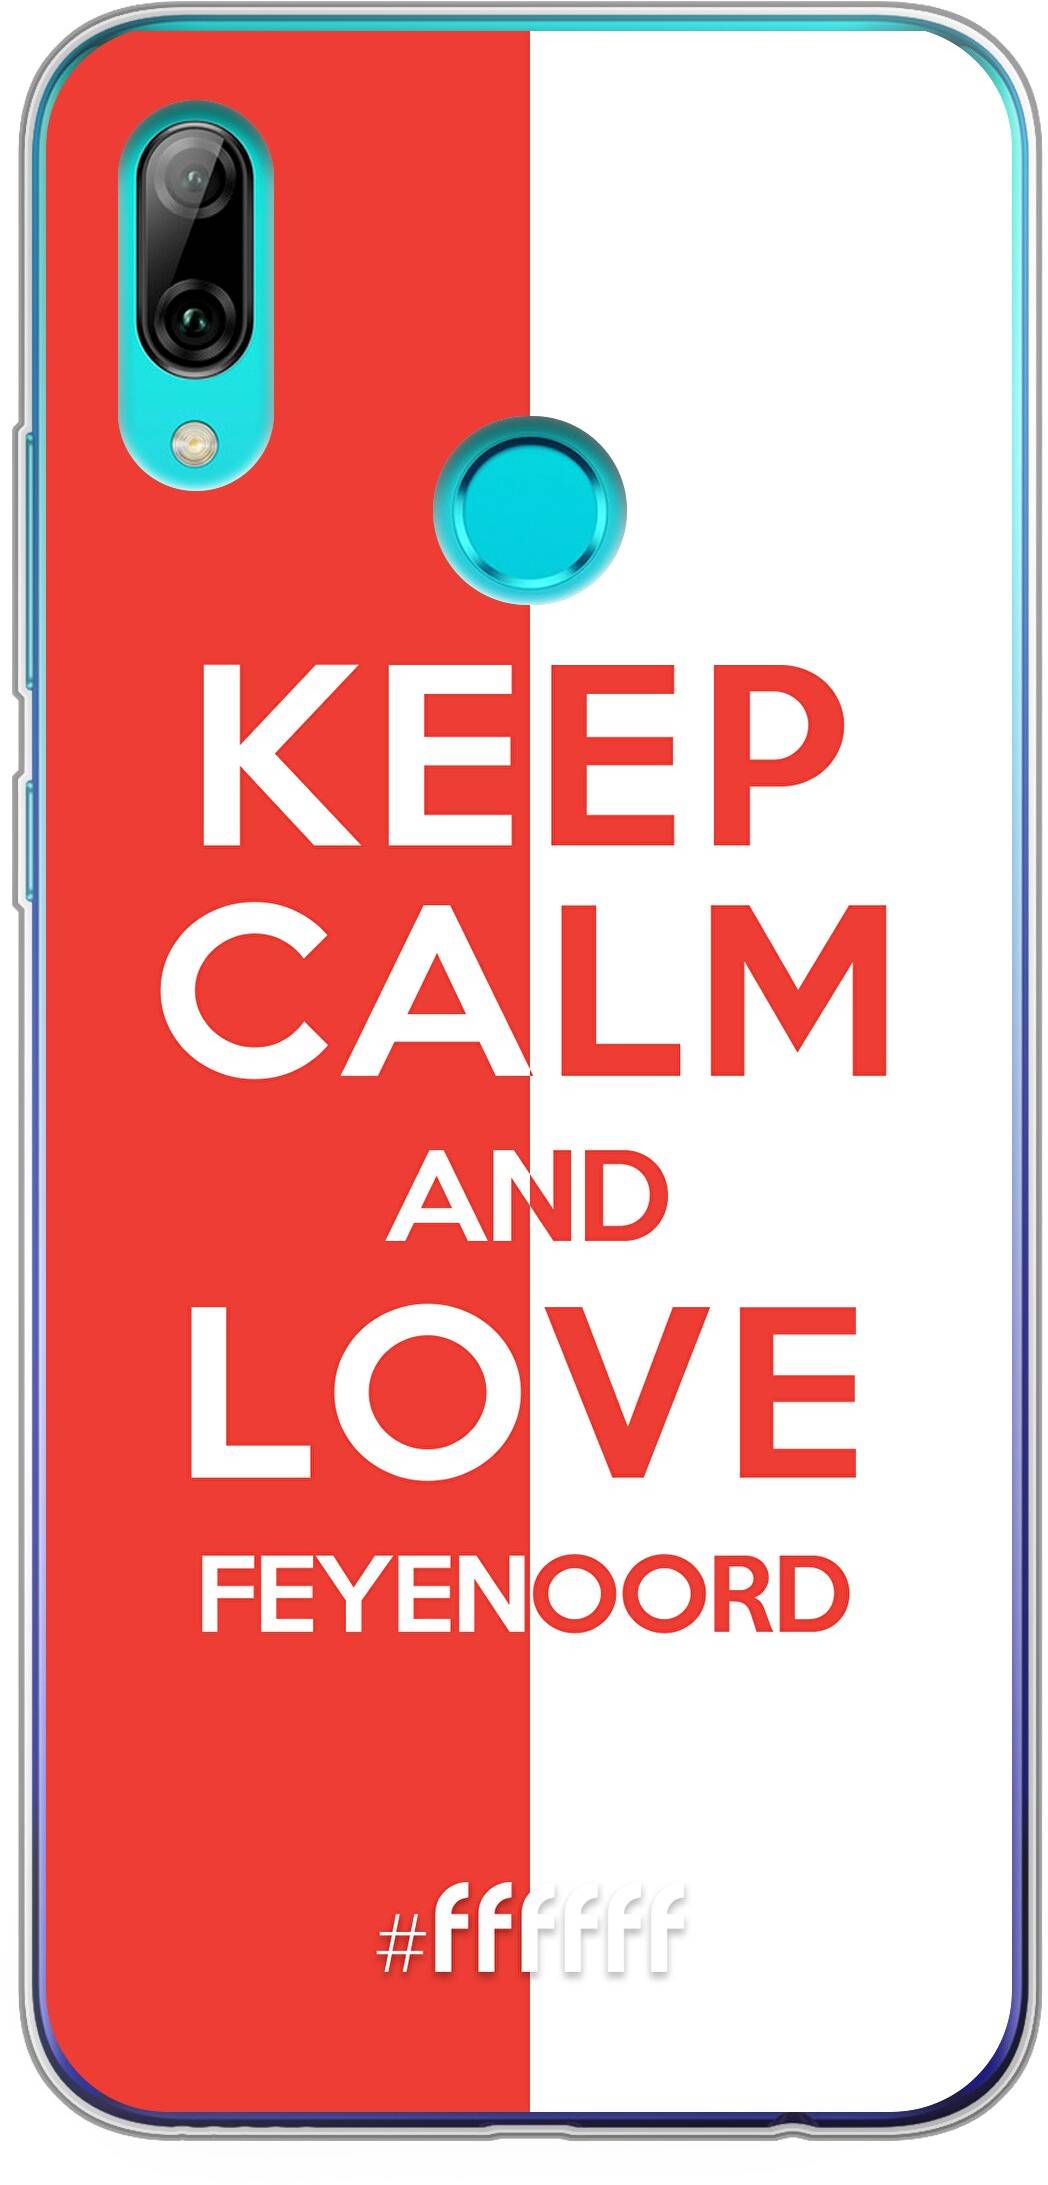 Feyenoord - Keep calm P Smart (2019)